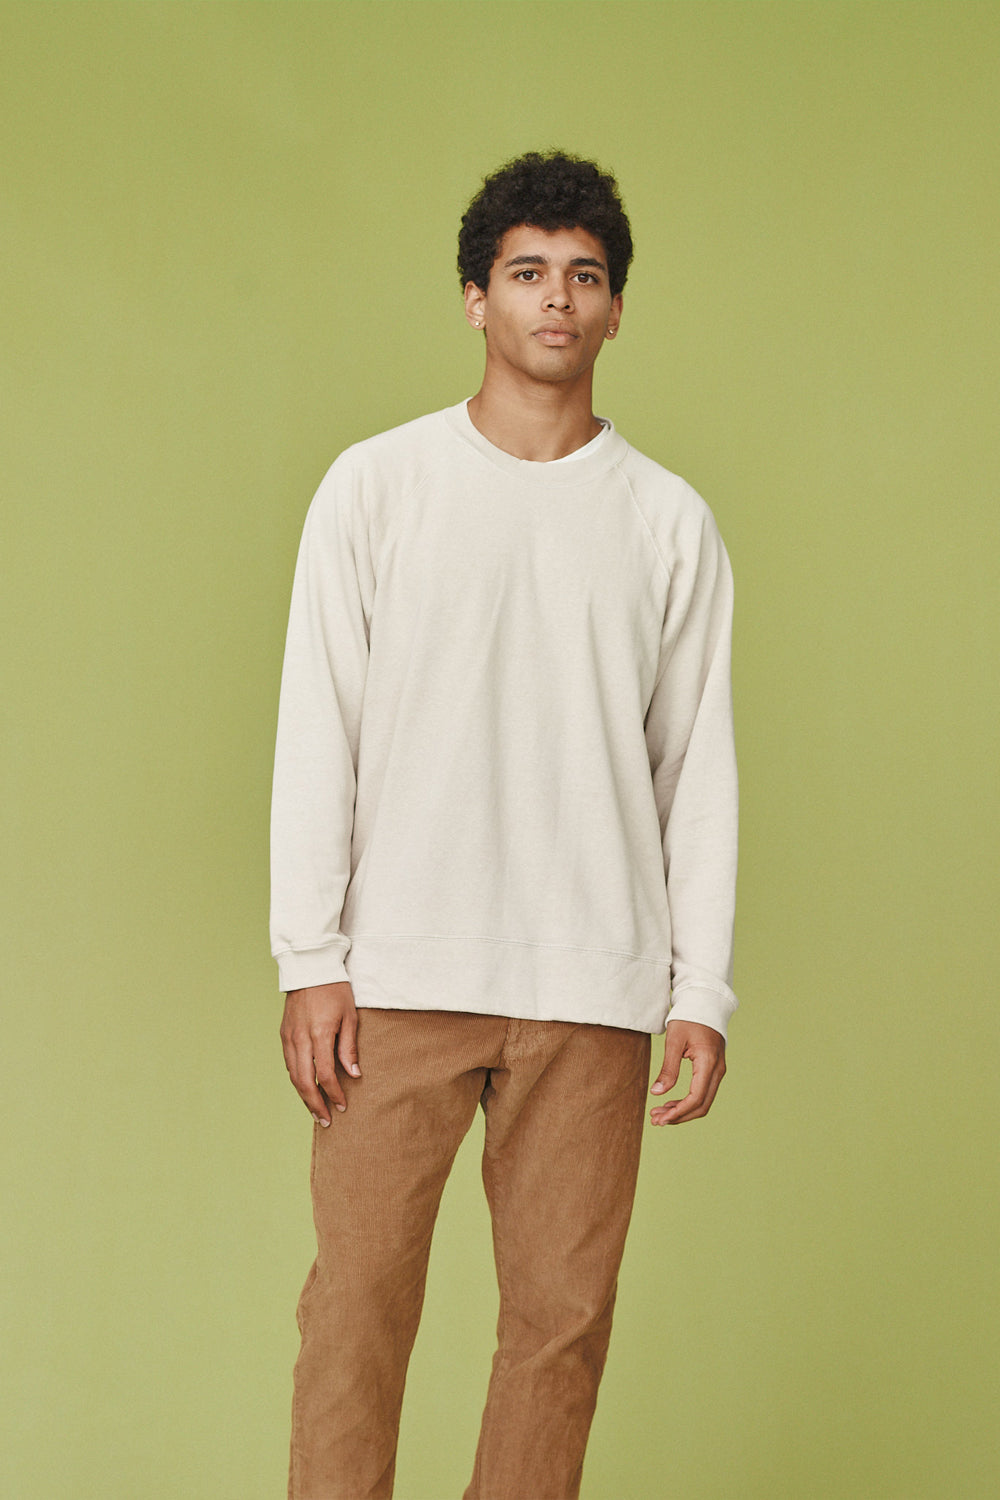 Sierra Raglan Sweatshirt | Jungmaven Hemp Clothing & Accessories / model_desc: Isaiah is 6’1” wearing L